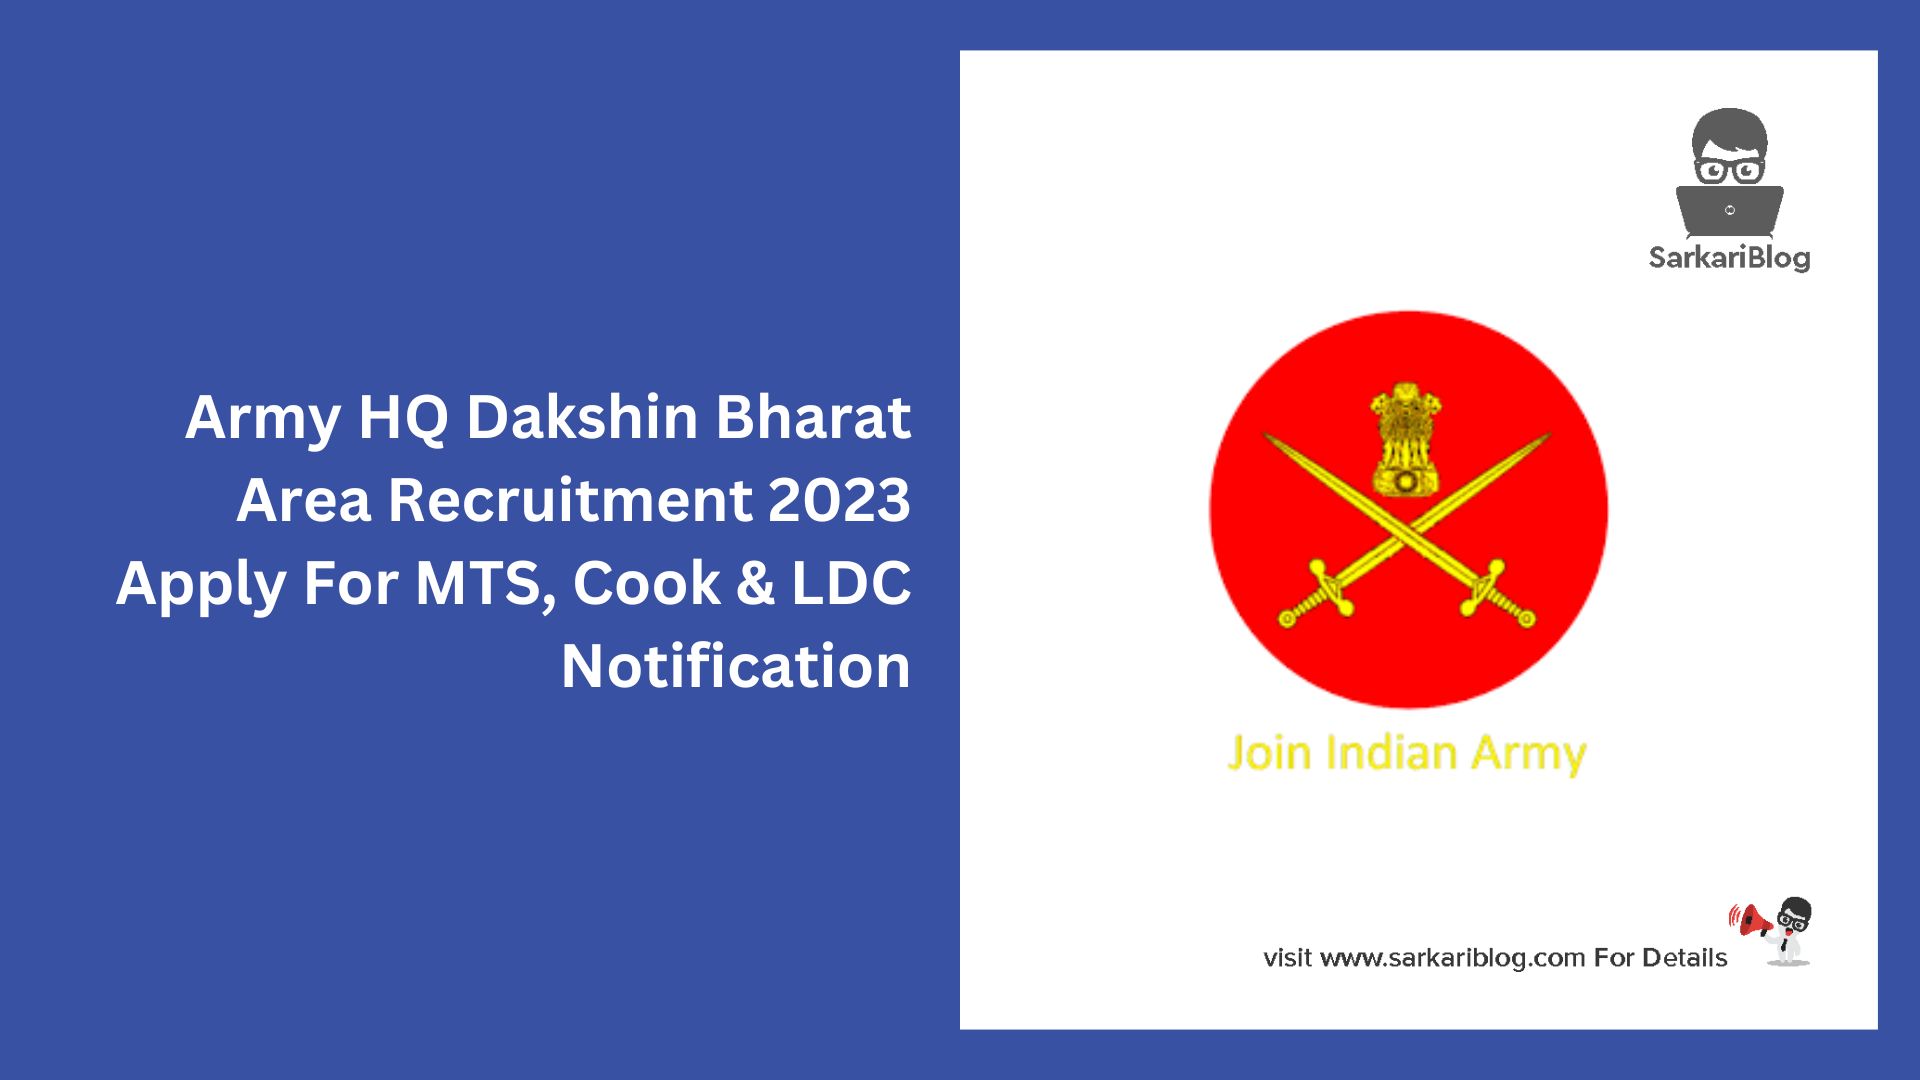 Army HQ Dakshin Bharat Area Recruitment 2023